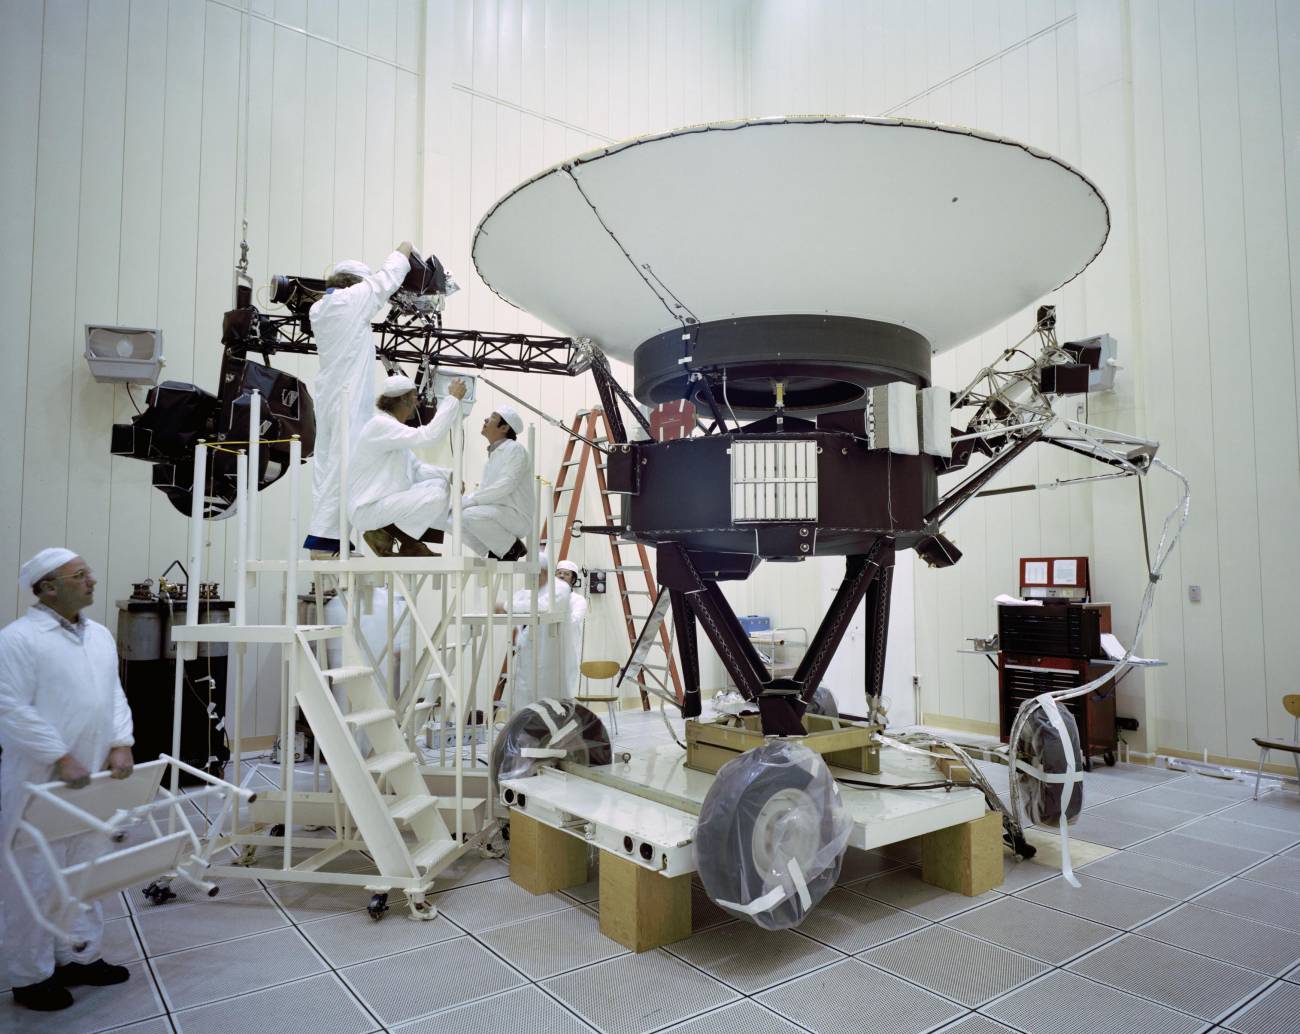 Sondas Voyager